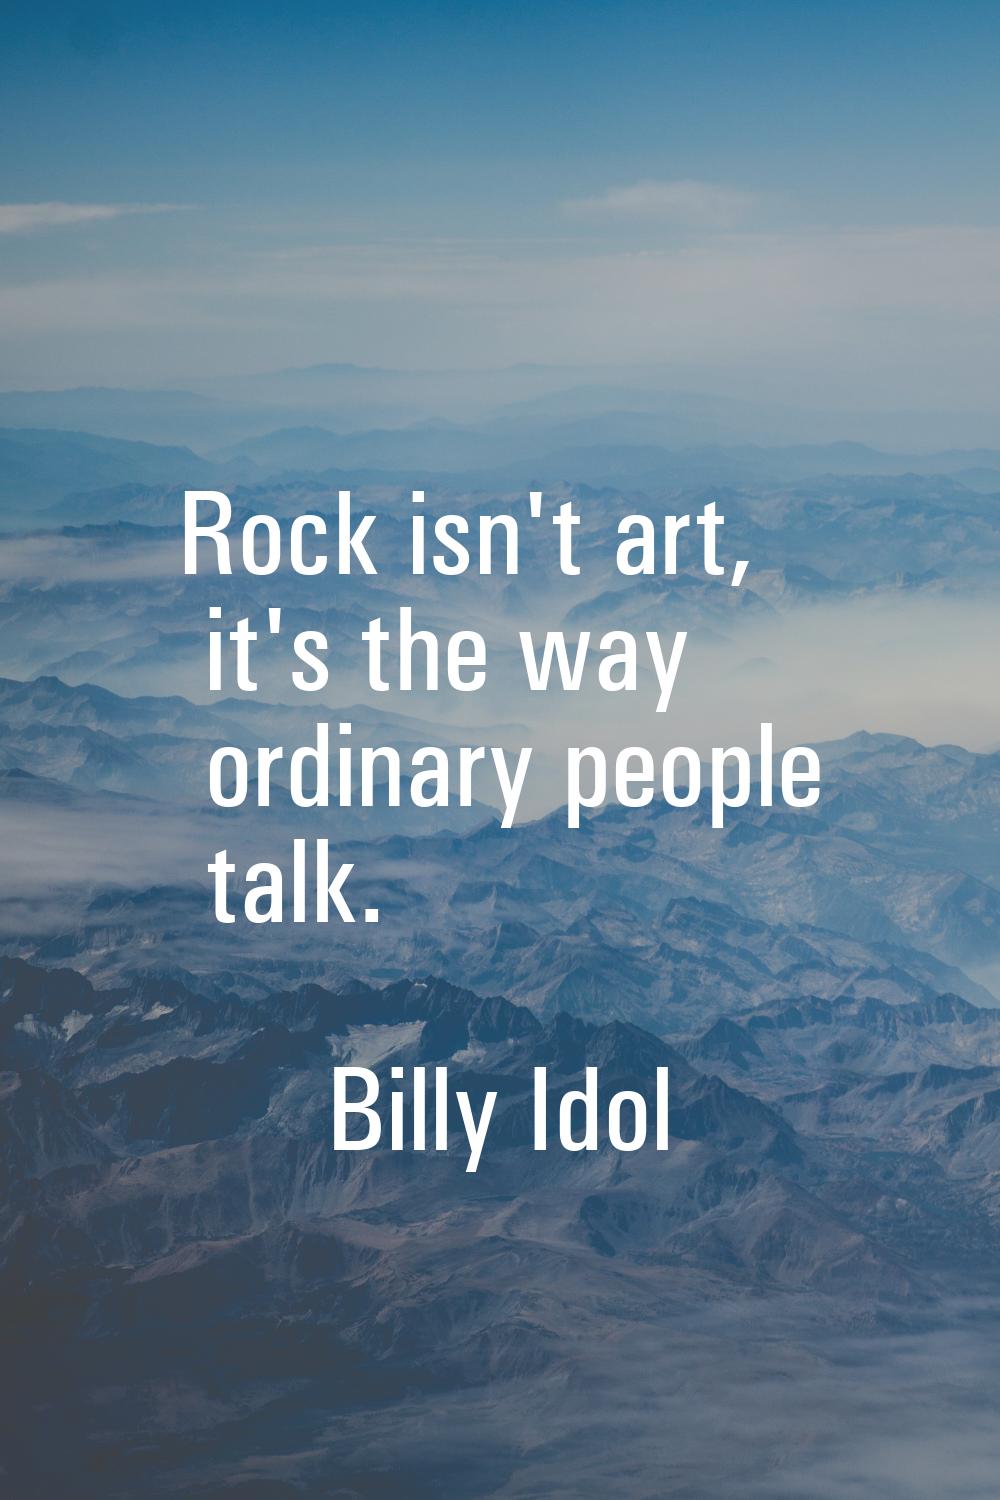 Rock isn't art, it's the way ordinary people talk.